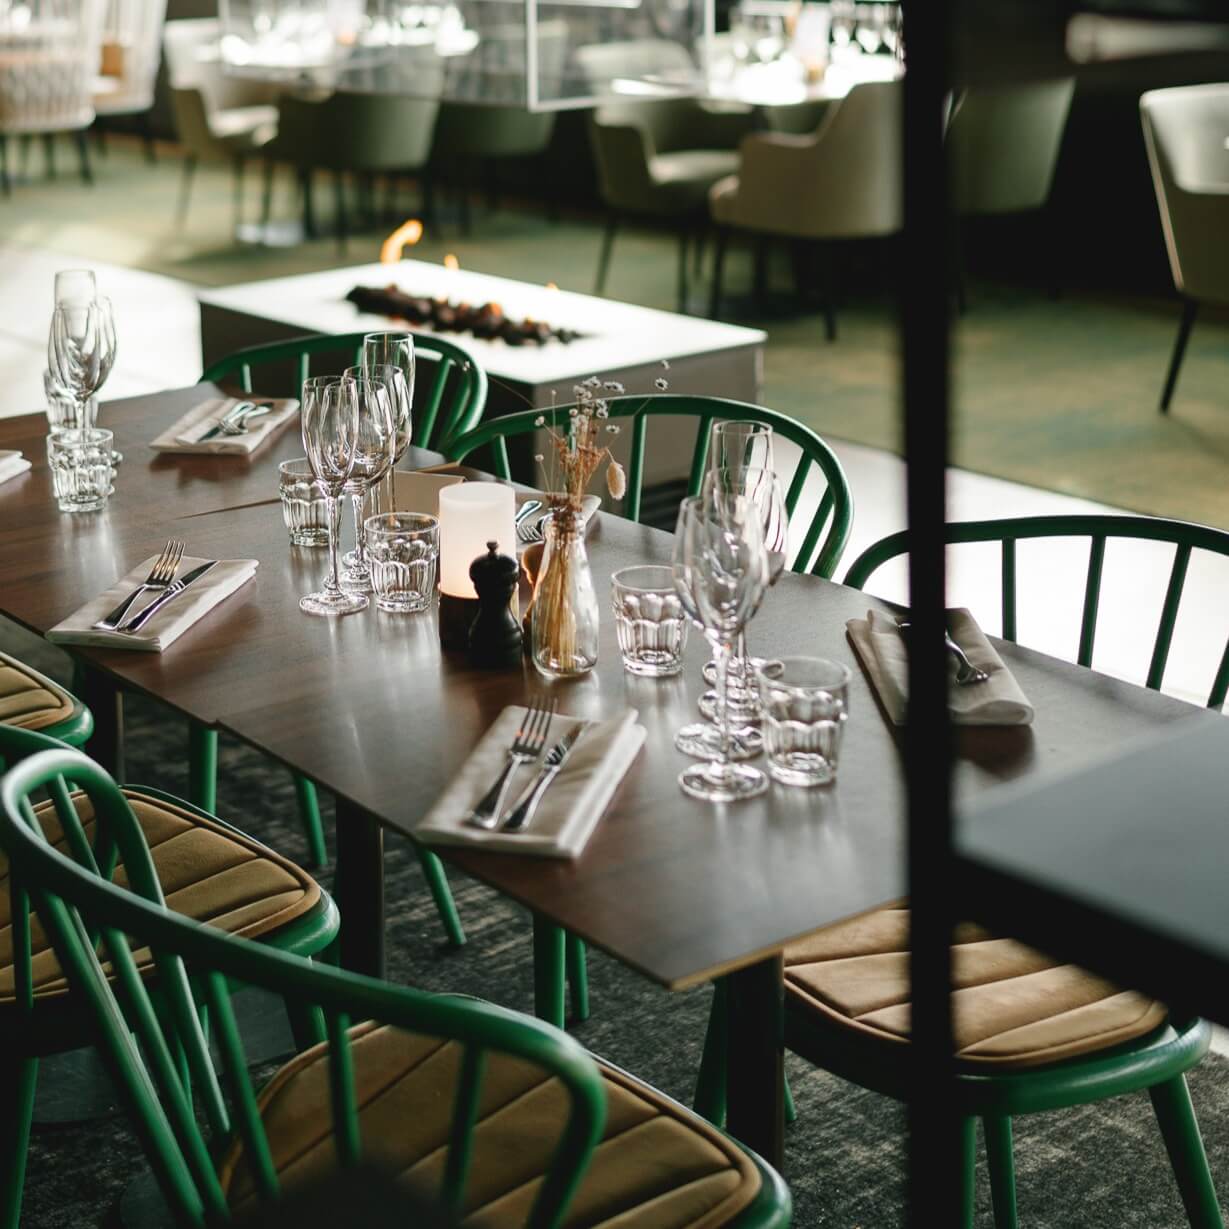 Tables and interior at Kava Eatery, Frösö Park Hotel.